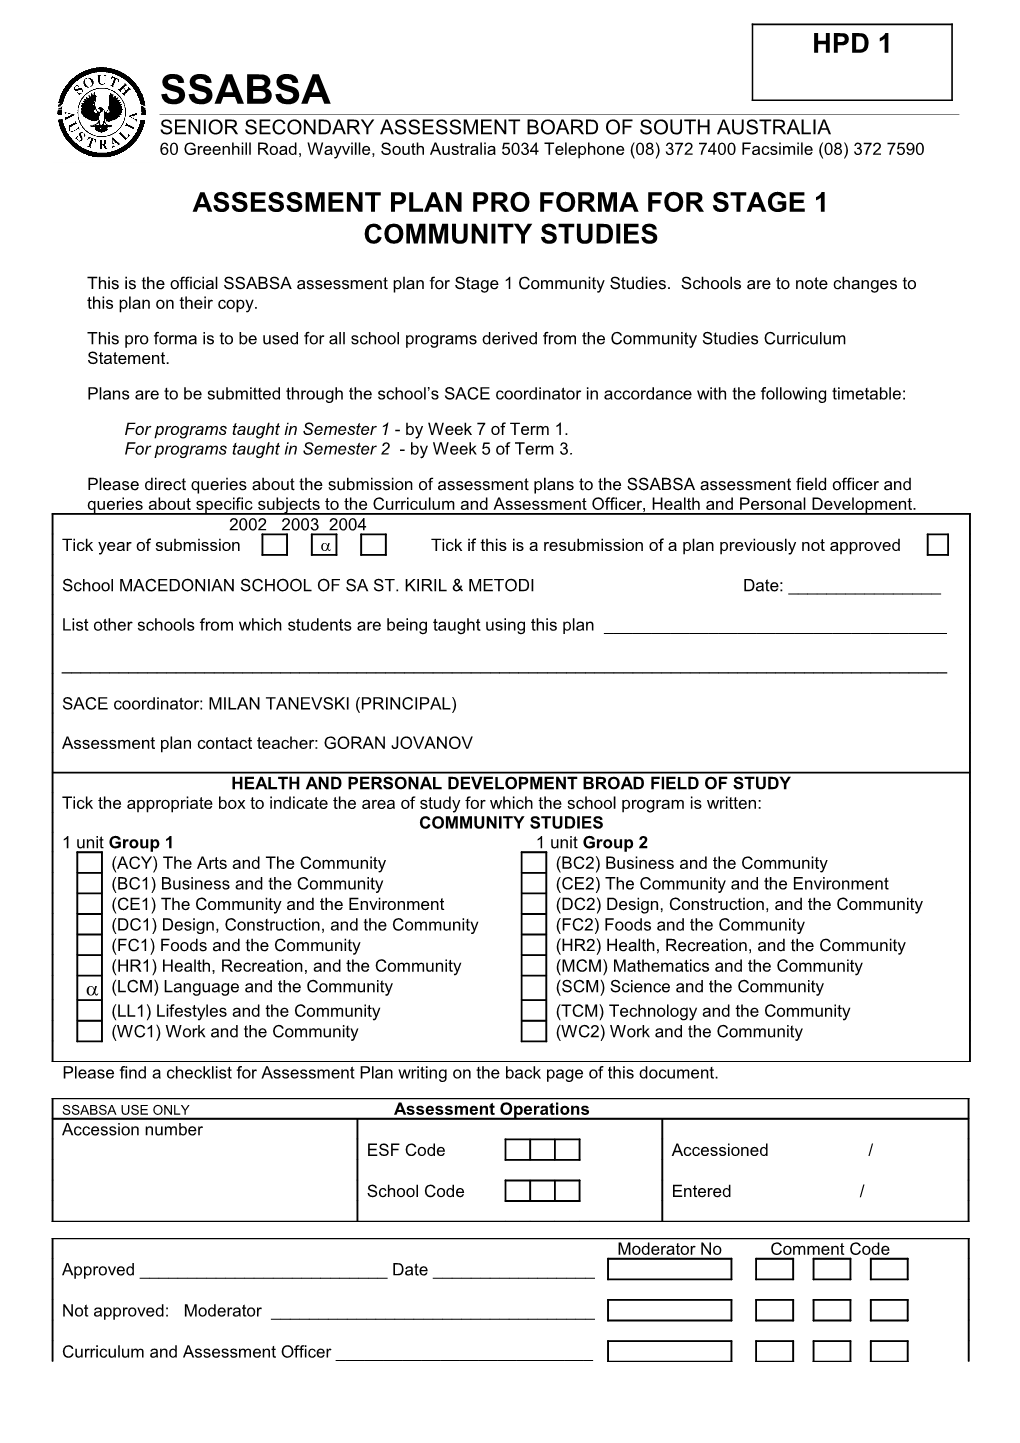 Community Studies Assessment Plan